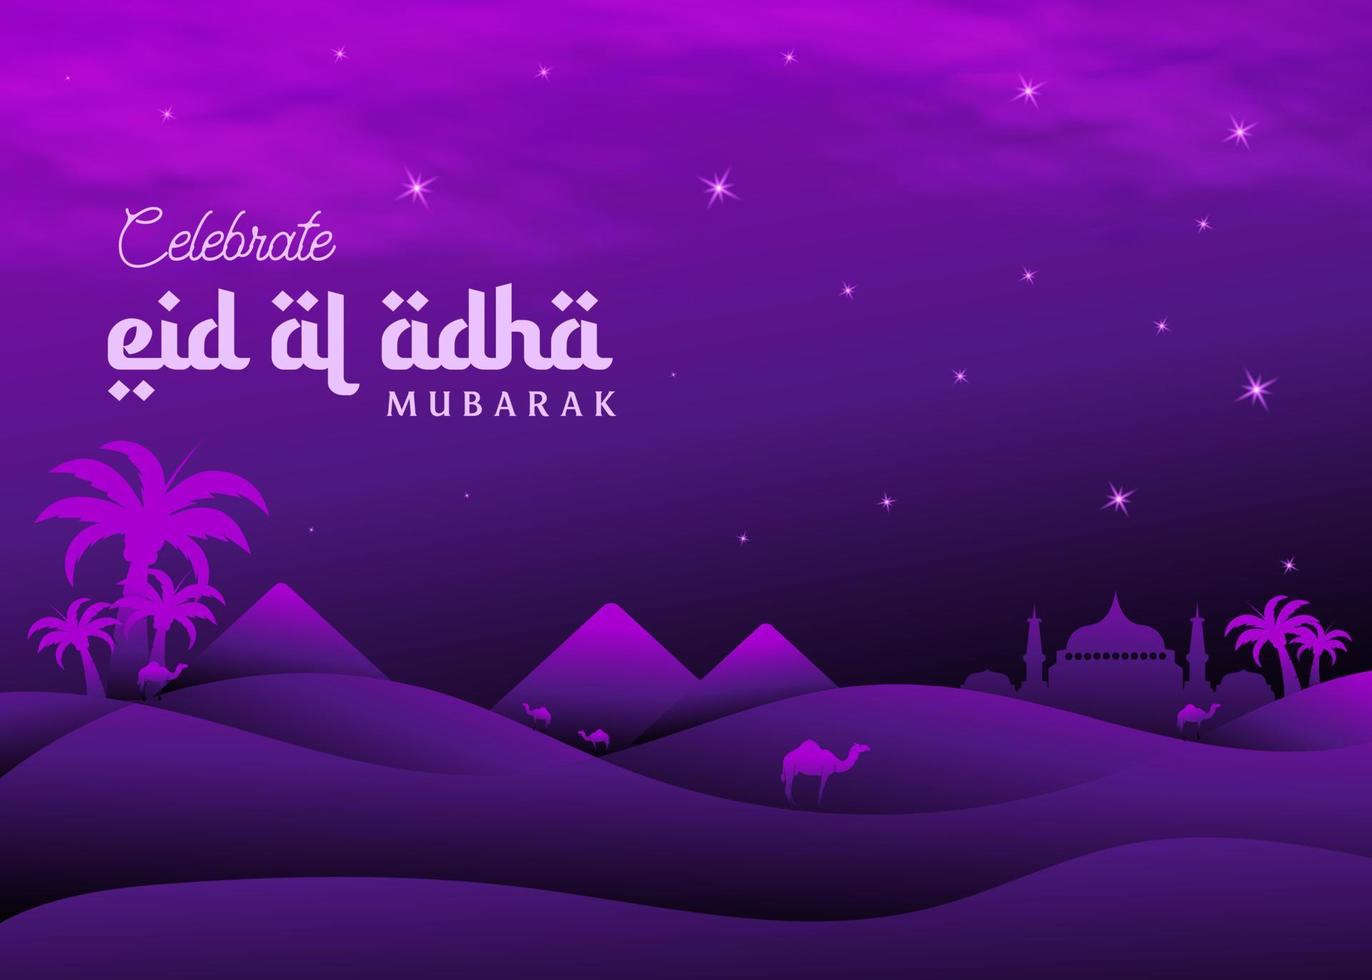 vector design with islamic background for eid al adha celebration